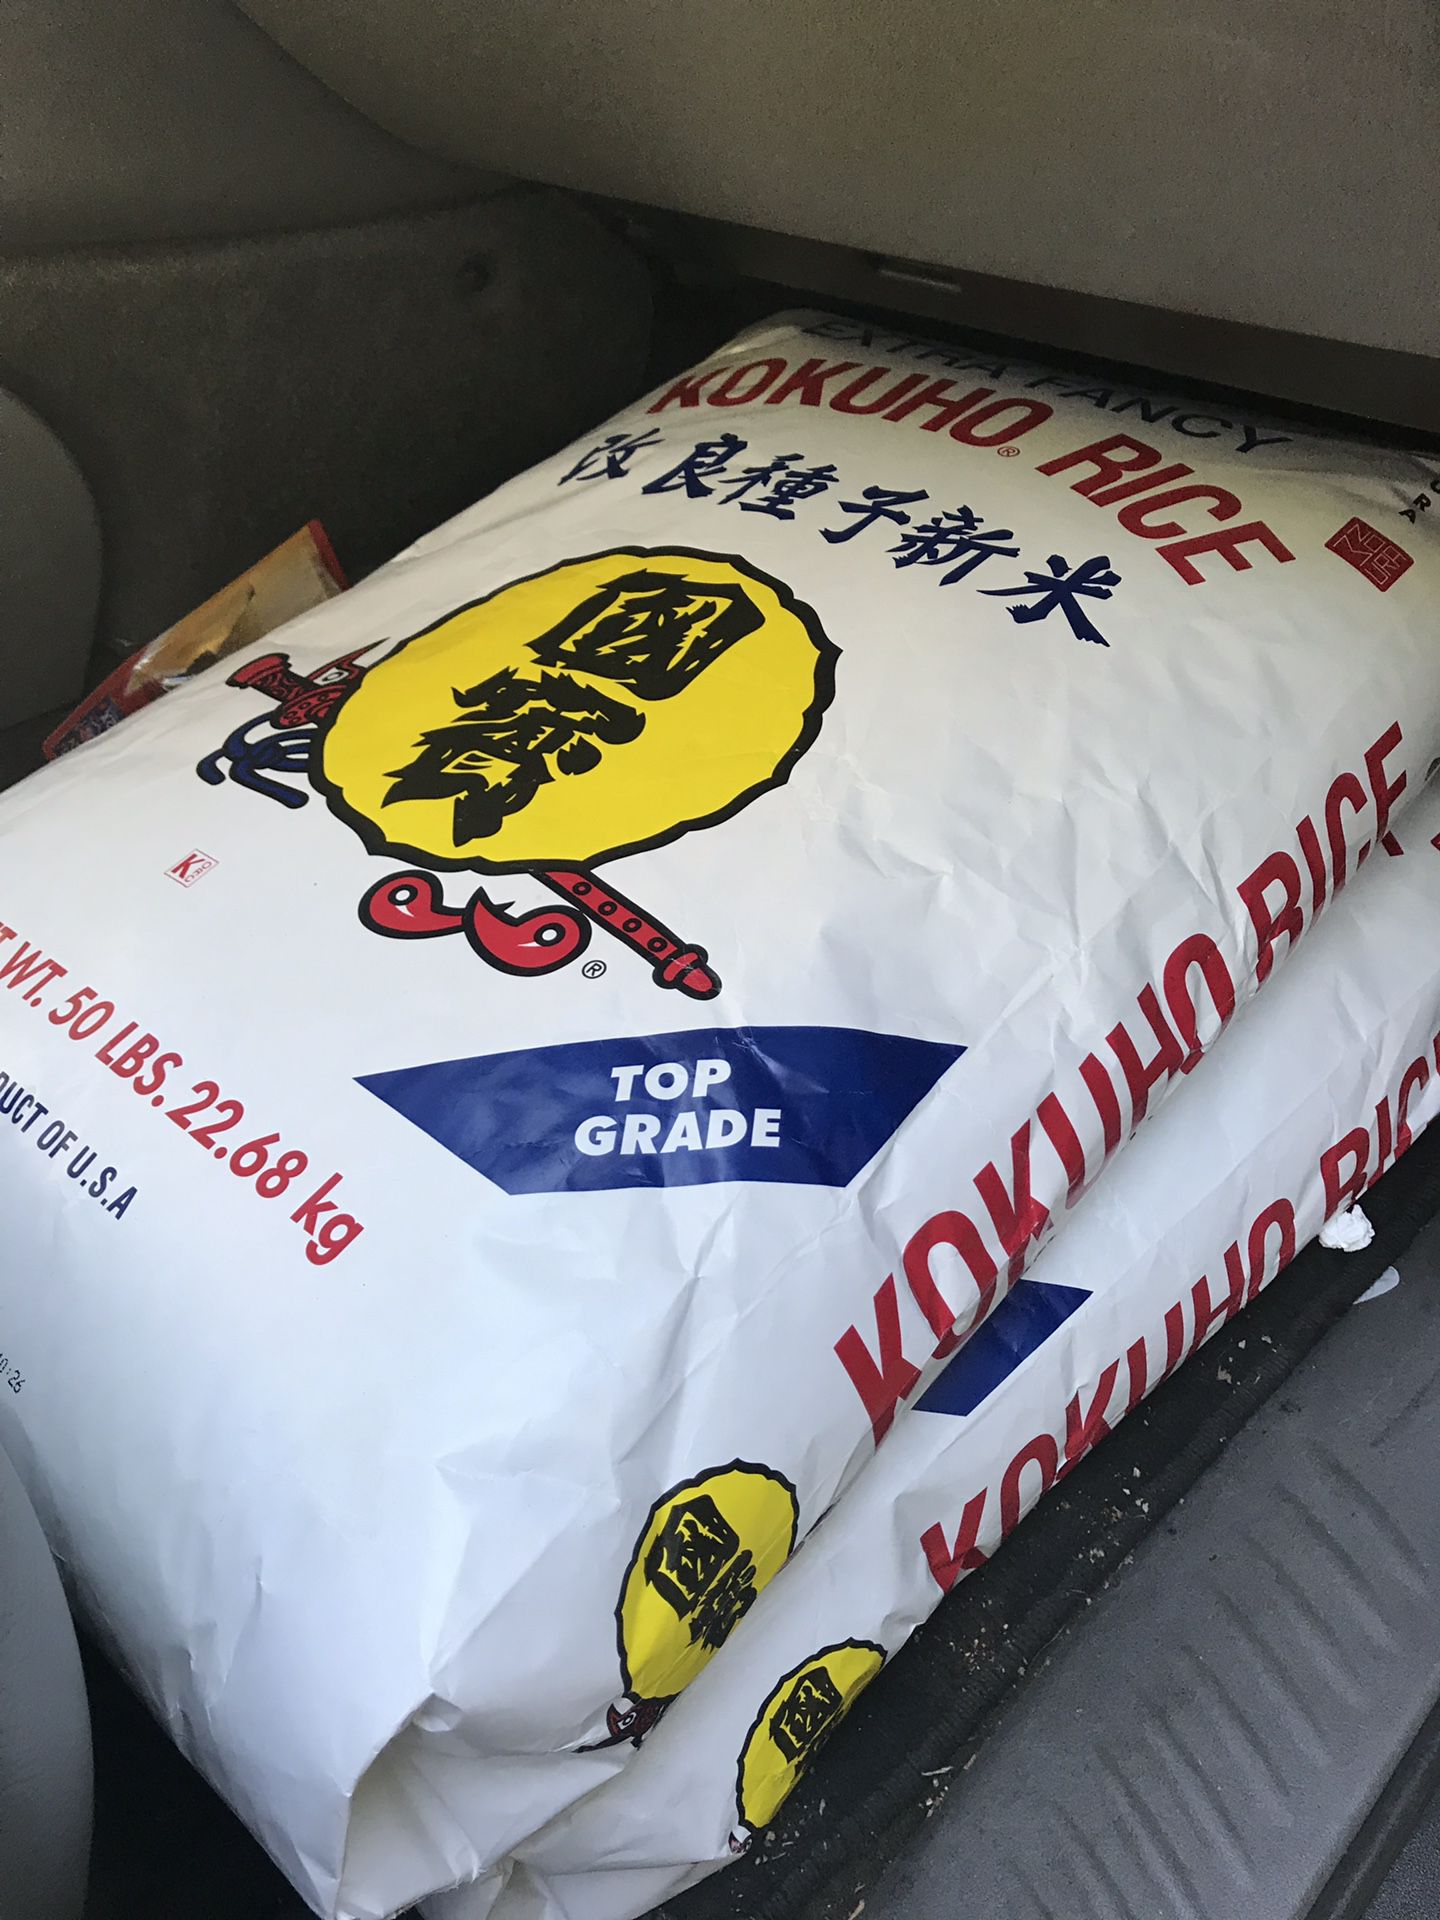 $40 each50 lbs sack of fancy kukoho rice top grade